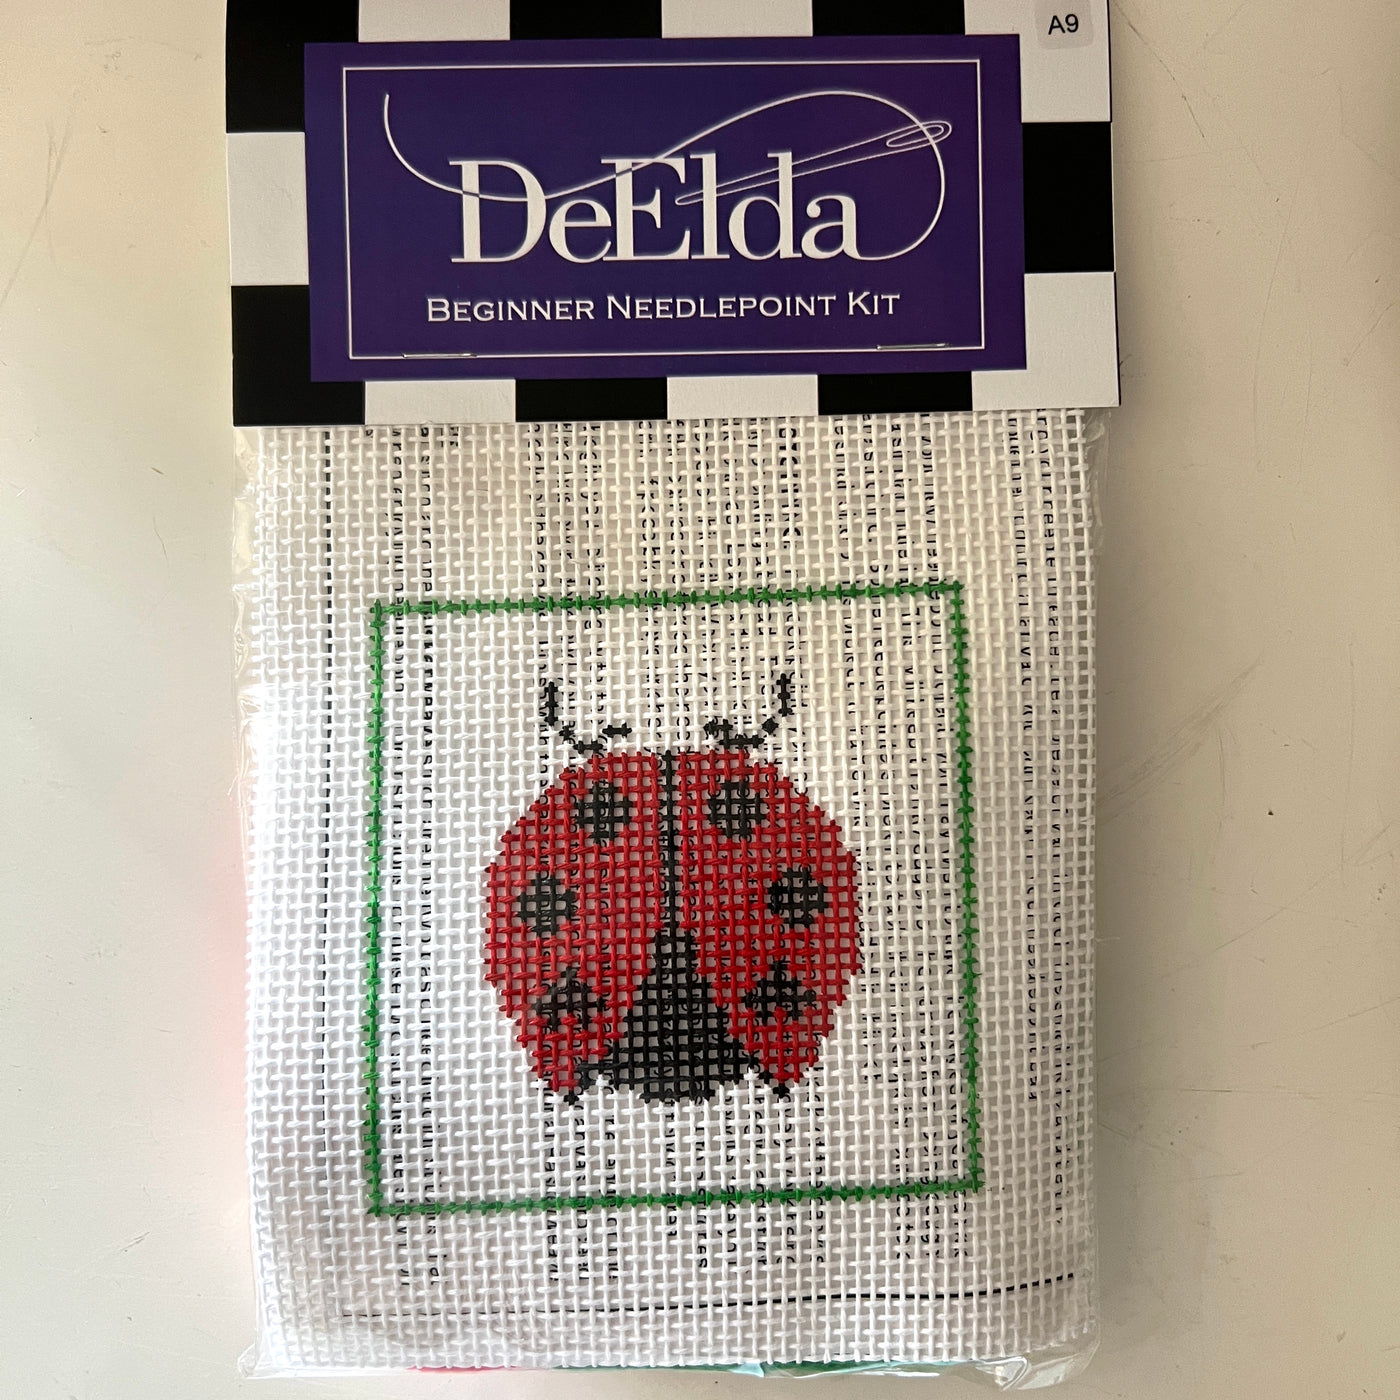 DeElda Lady Bug Kit (includes fiber)